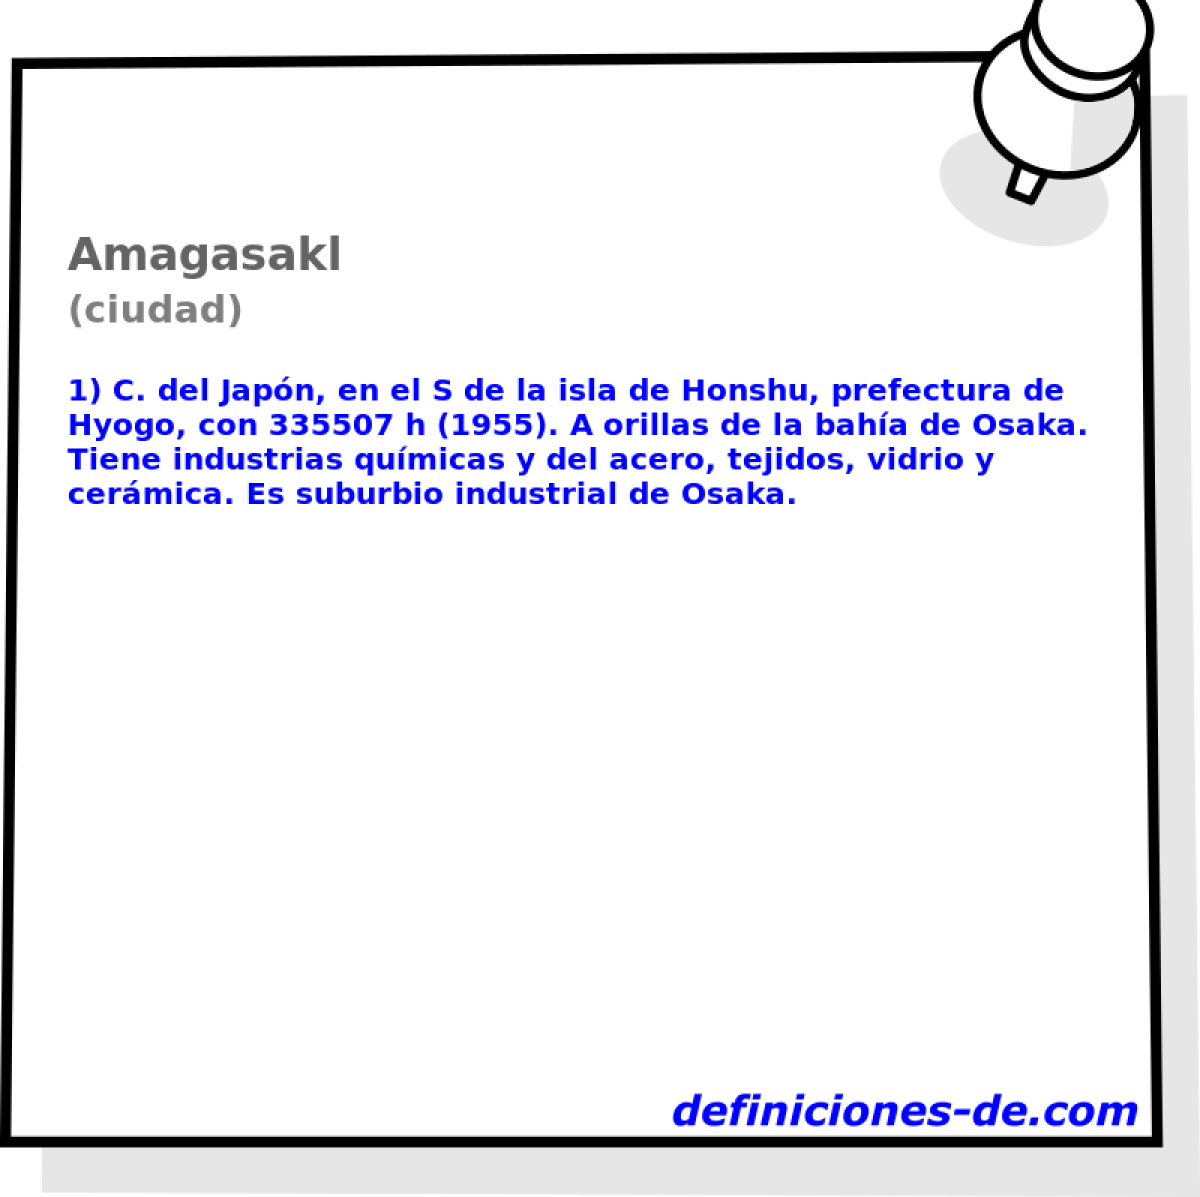 Amagasakl (ciudad)